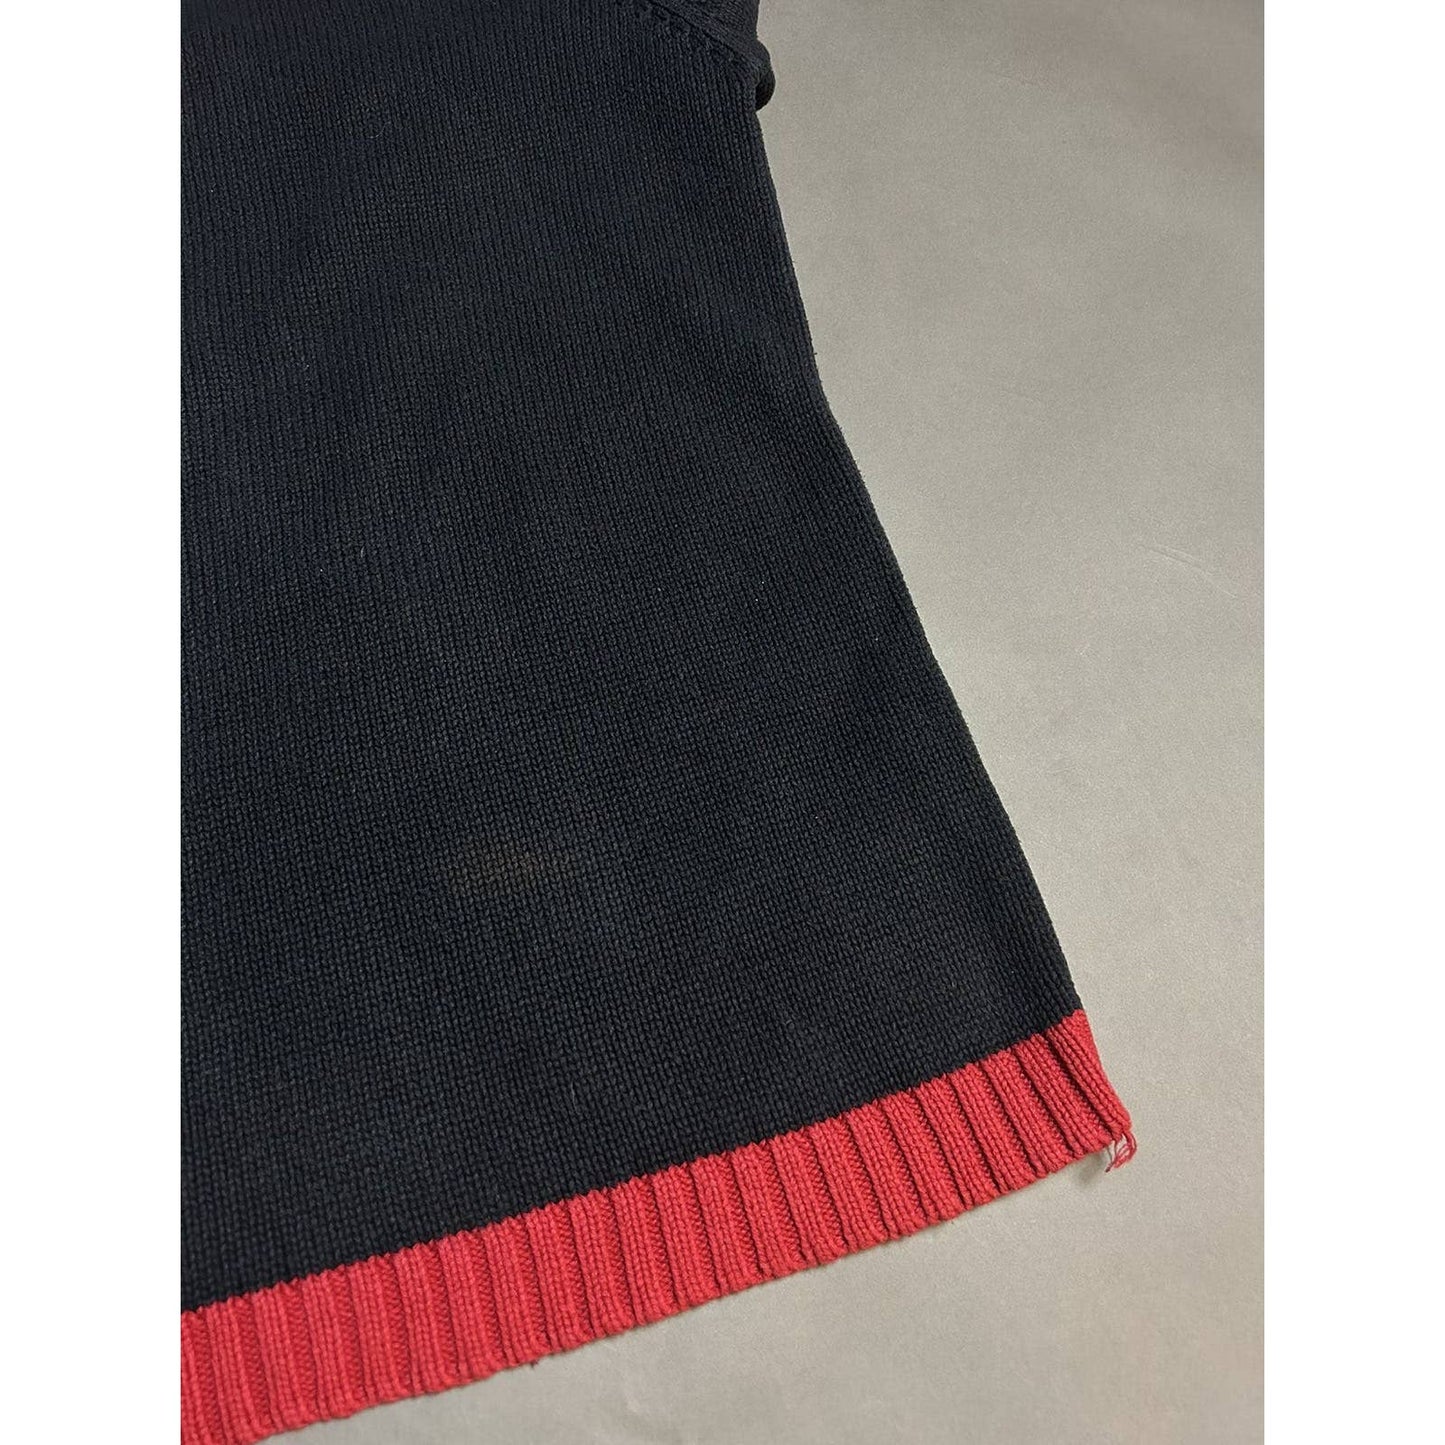 YSL sweater turtleneck black red Saint Laurent Jeans